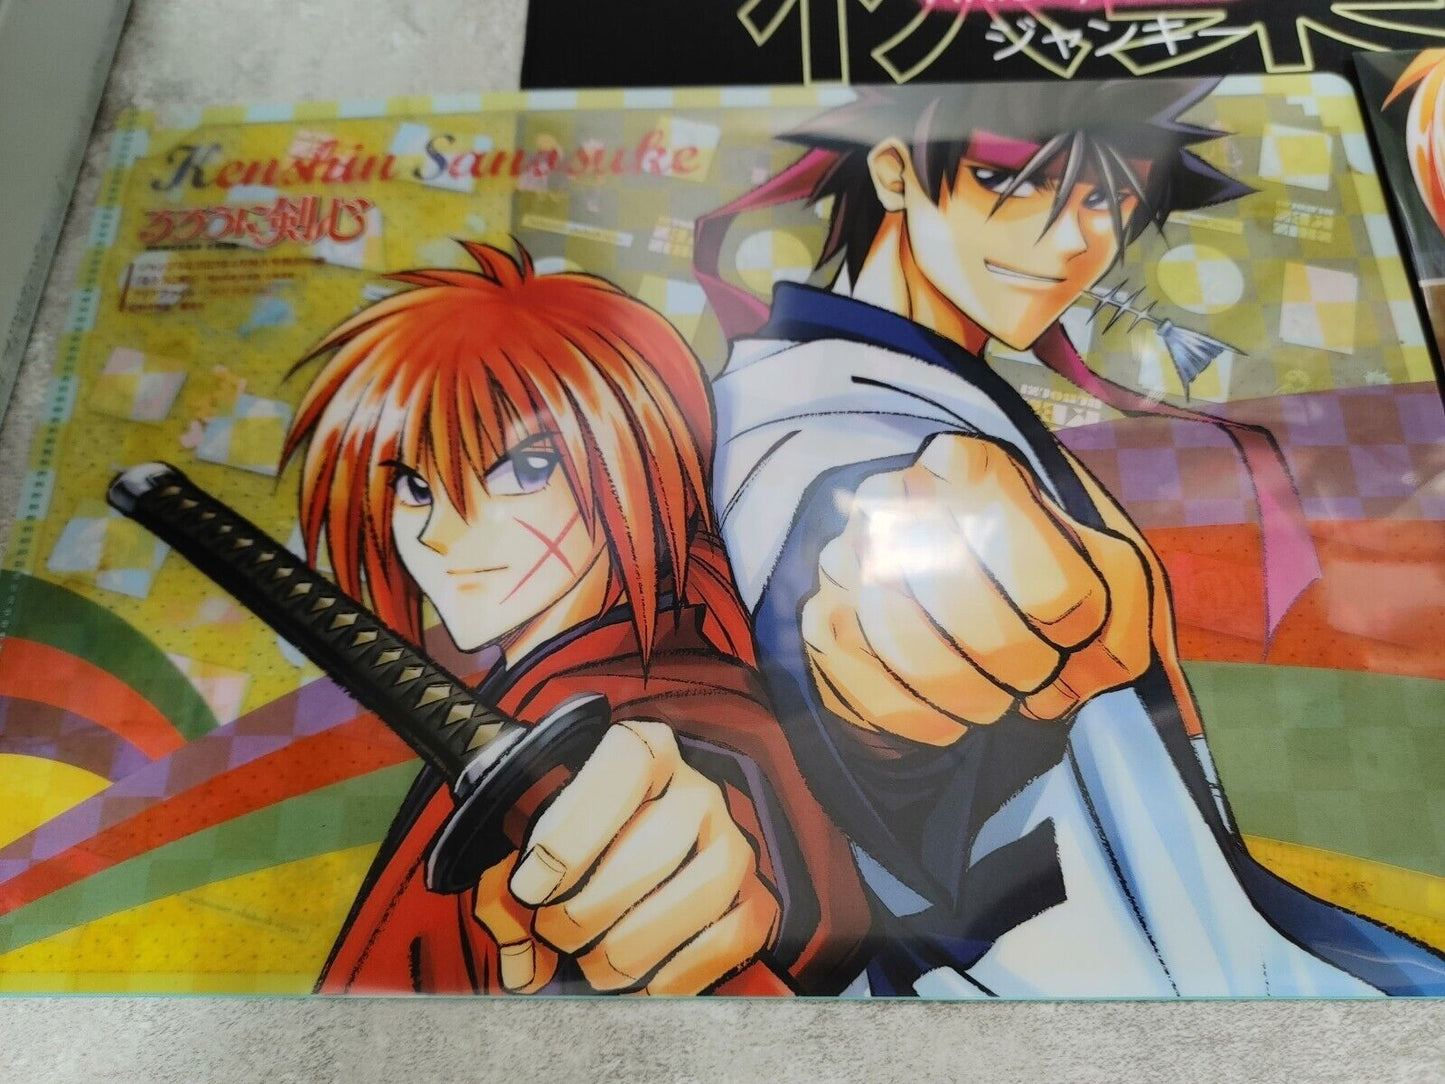 Anime Rurouni Kenshin Manga File Folder Lot Japan Jump Comics Limited Goods JP